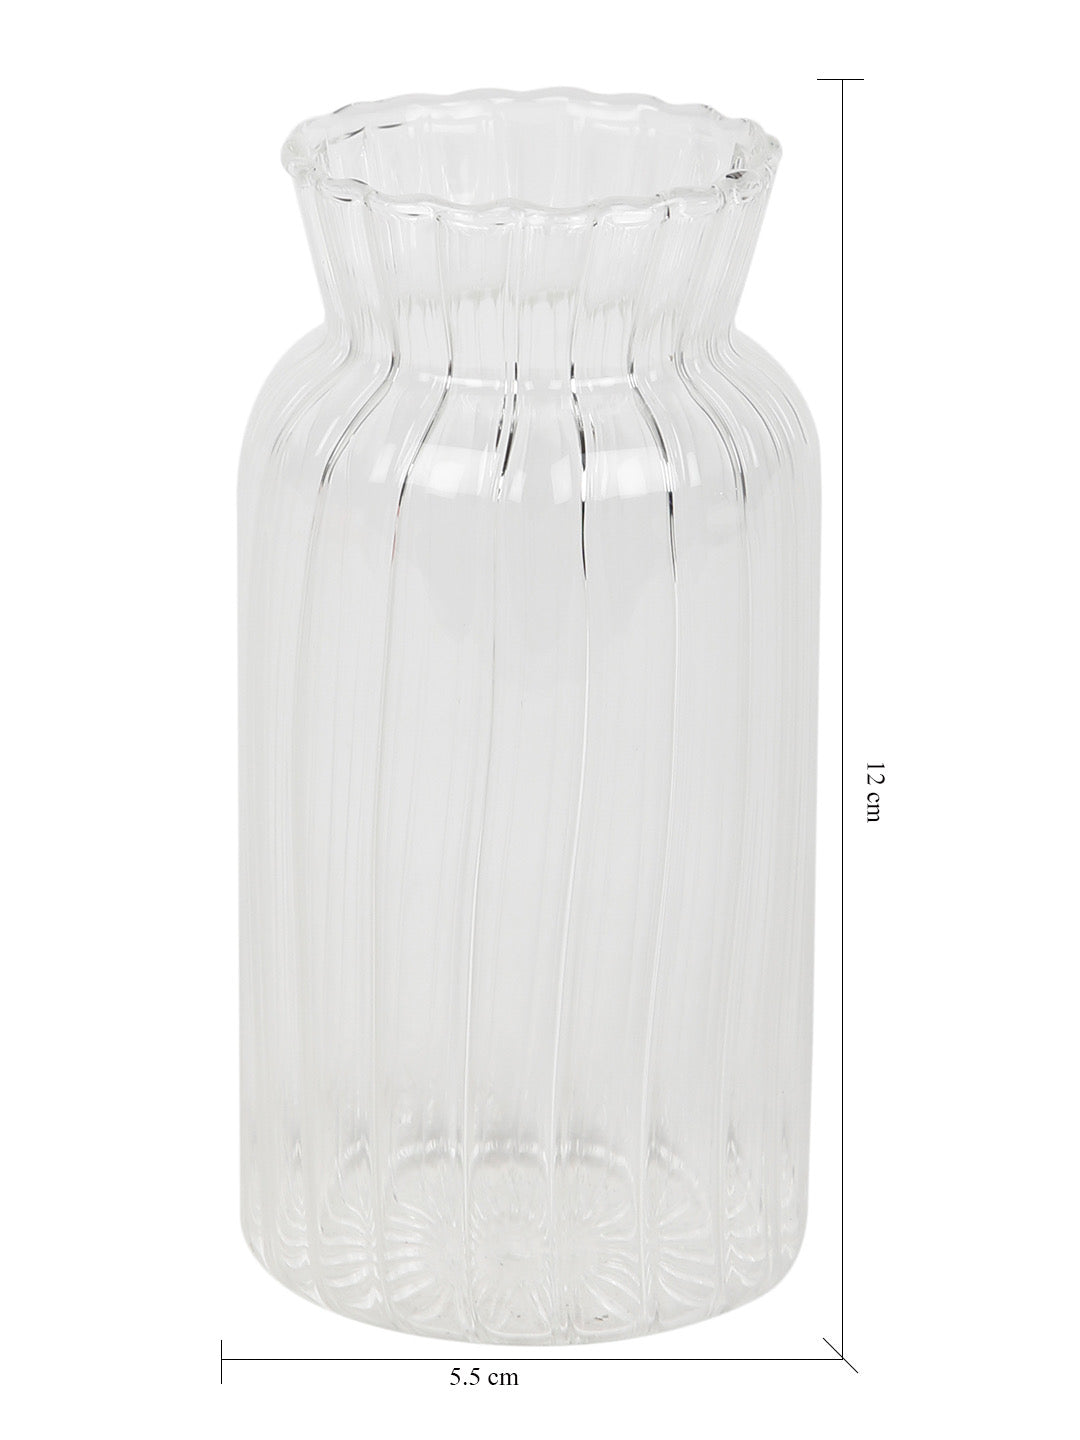 Textured Cylindrical Glass Vase - Default Title (VAS22012)